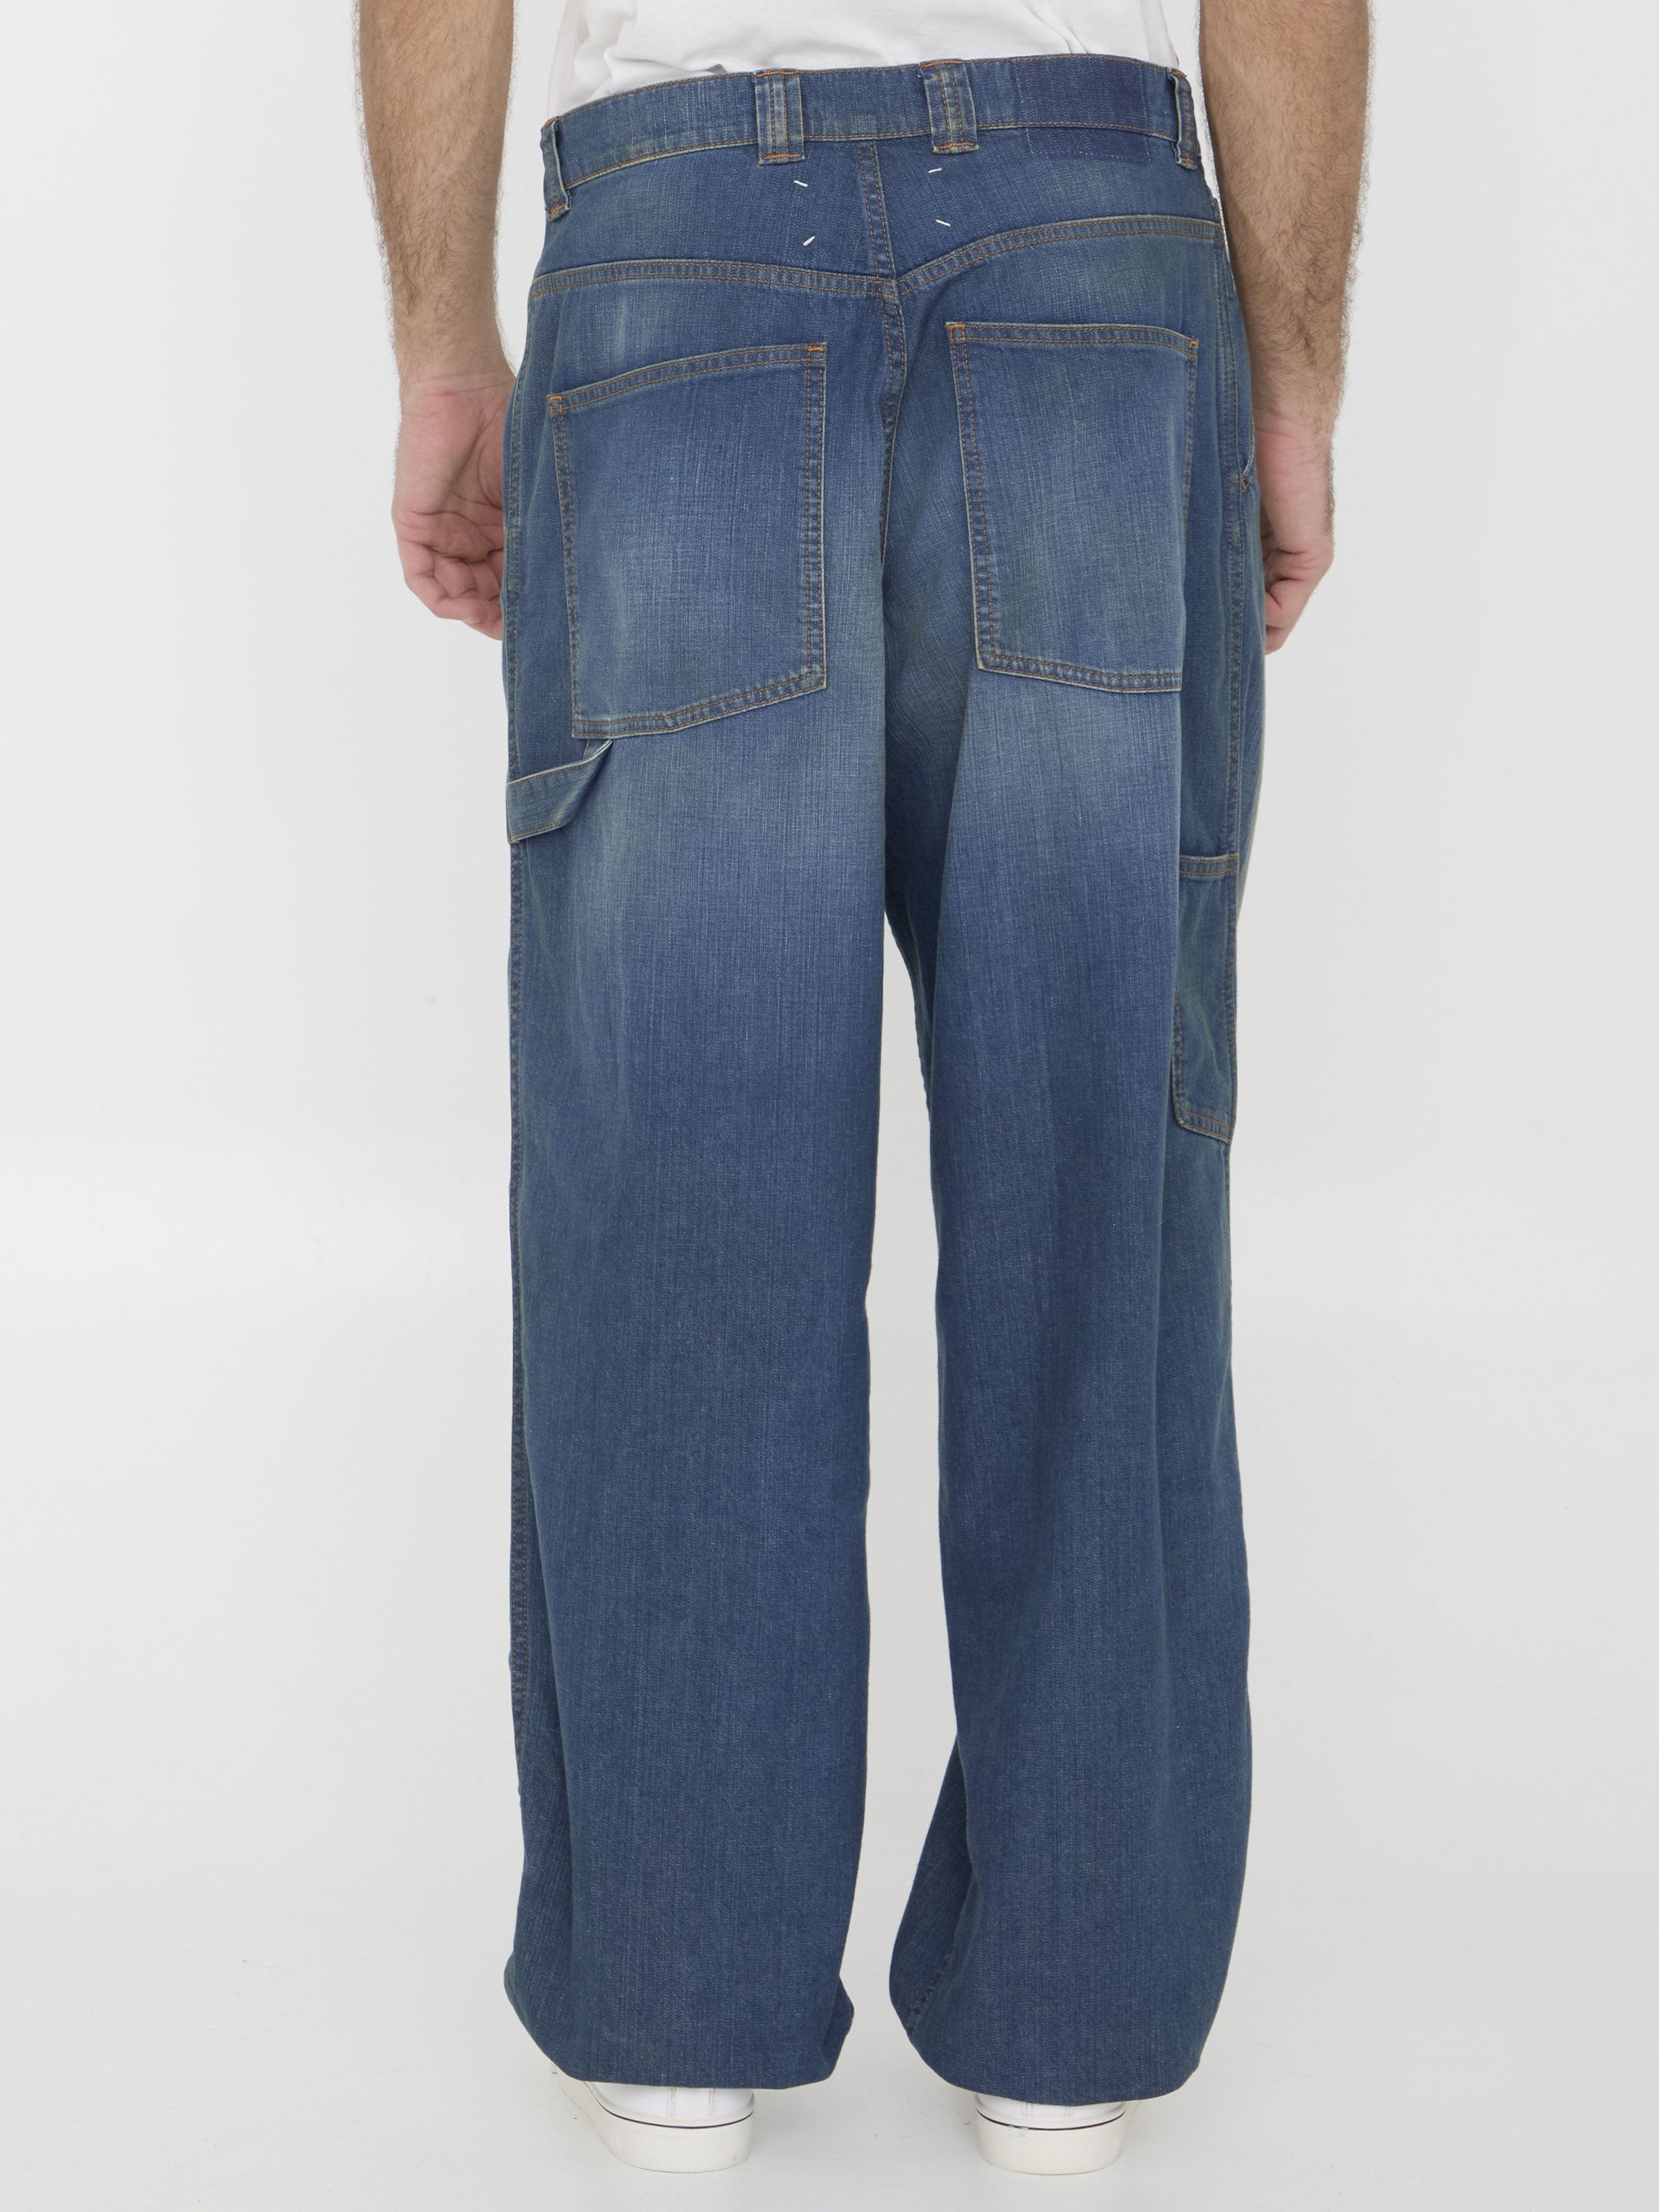 MAISON-MARGIELA-OUTLET-SALE-Americana-wash-jeans-Jeans-ARCHIVE-COLLECTION-4.jpg